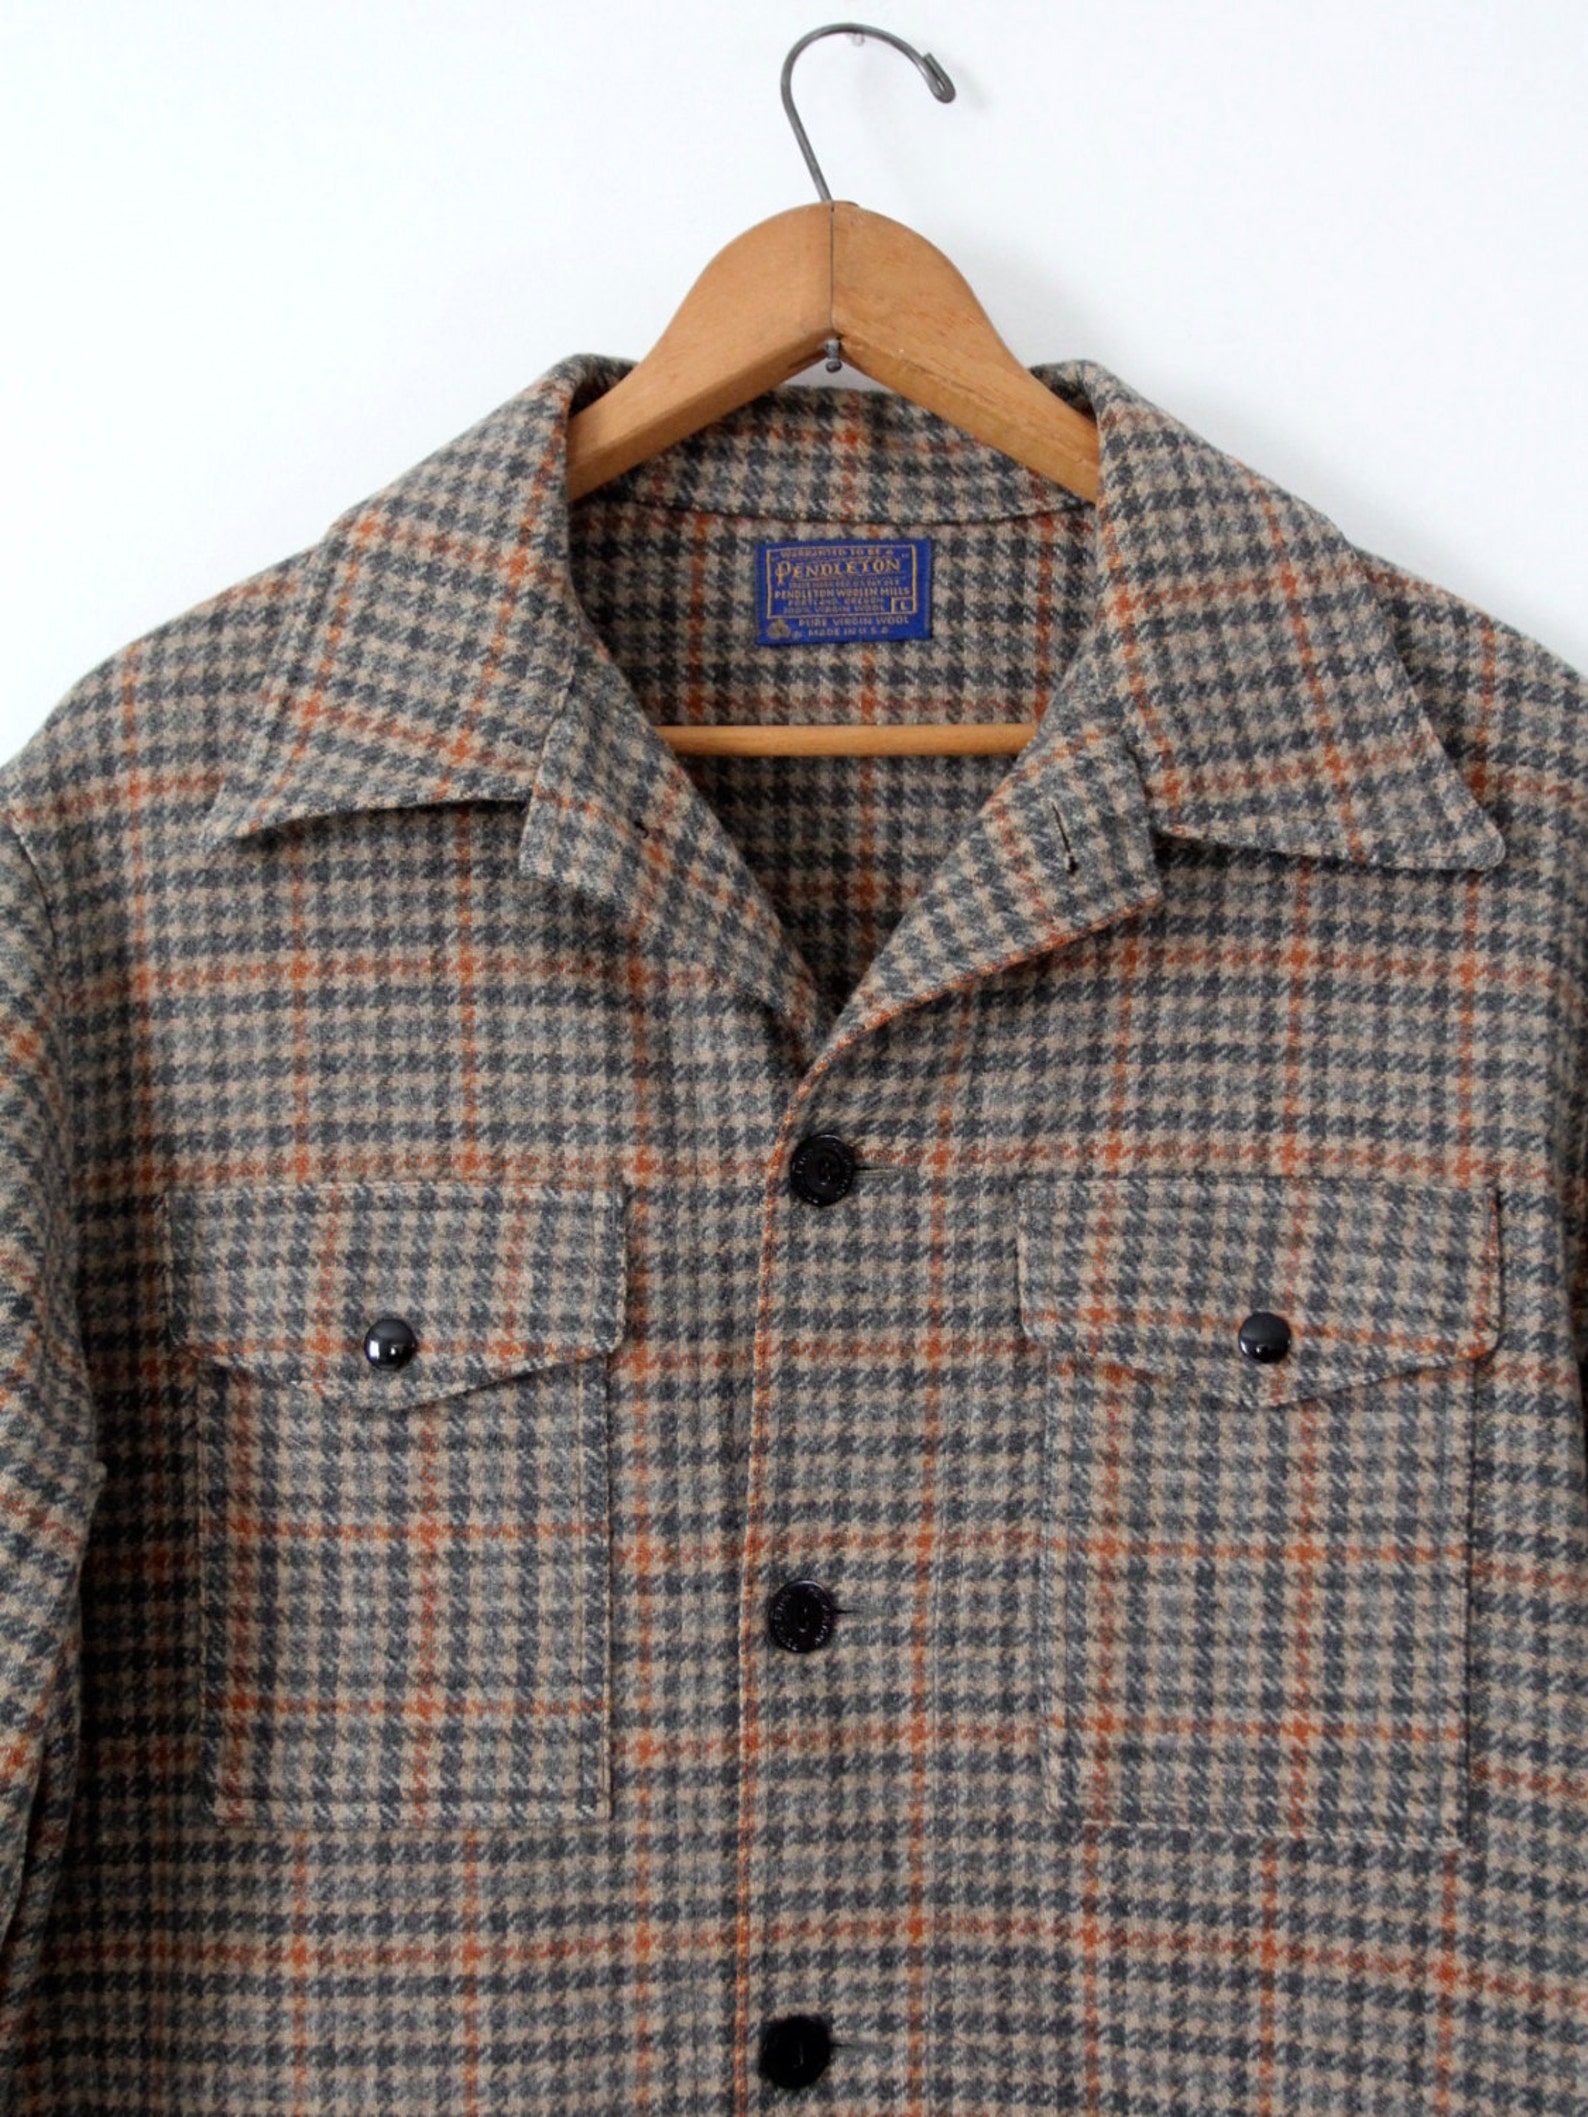 Vintage 60s Pendleton Plaid Check Jacket, Wool Coat - Etsy